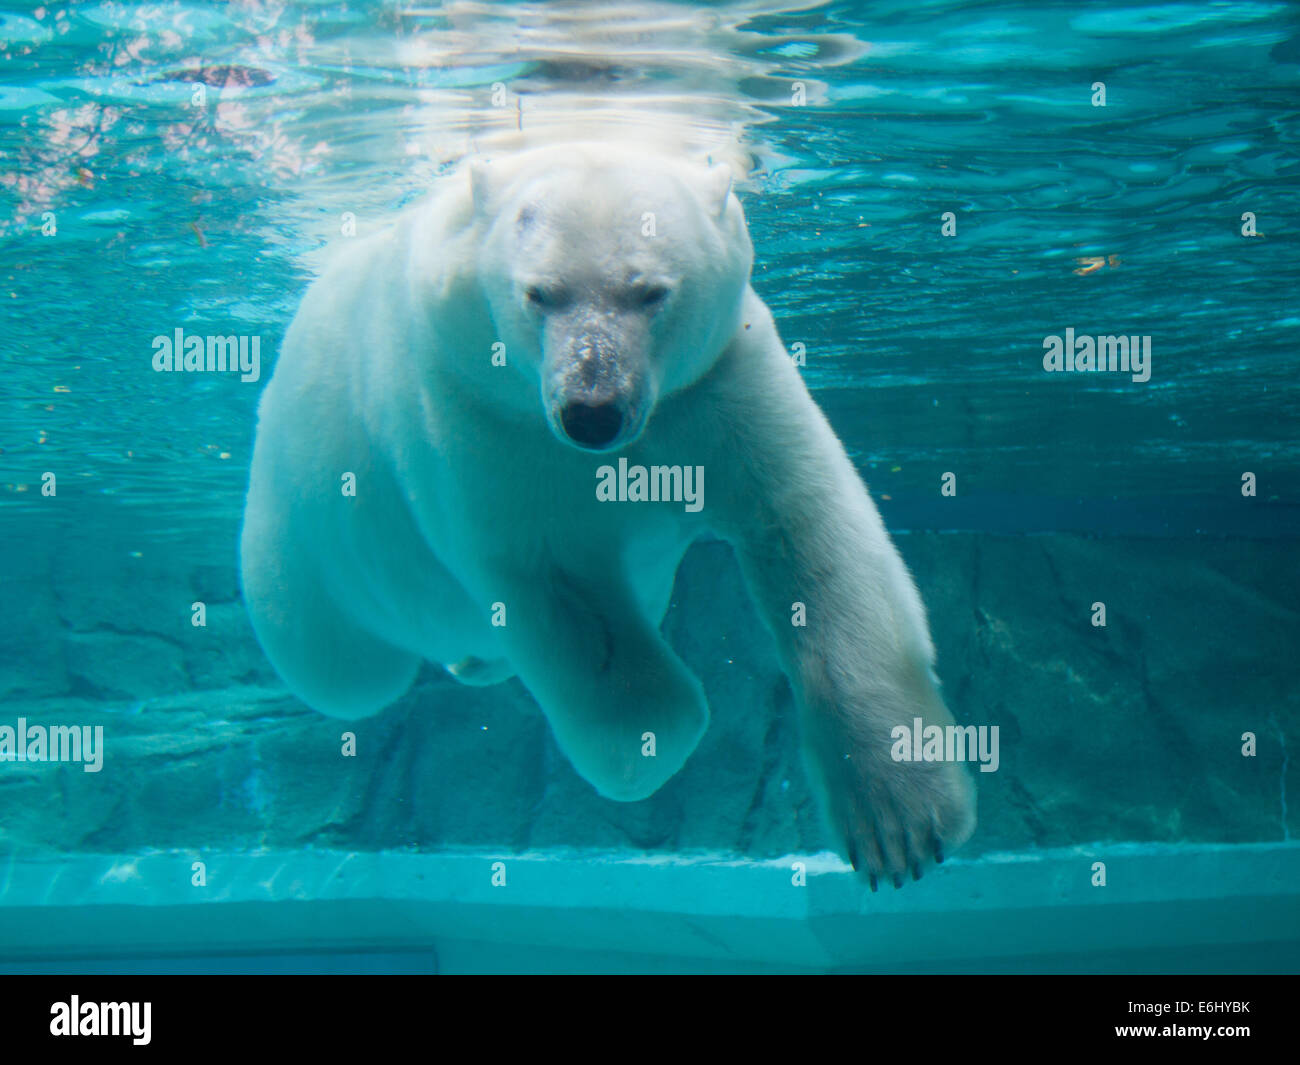 Anana, el oso polar hembra residente del Lincoln Park Zoo de Chicago, nadar bajo el agua. Foto de stock